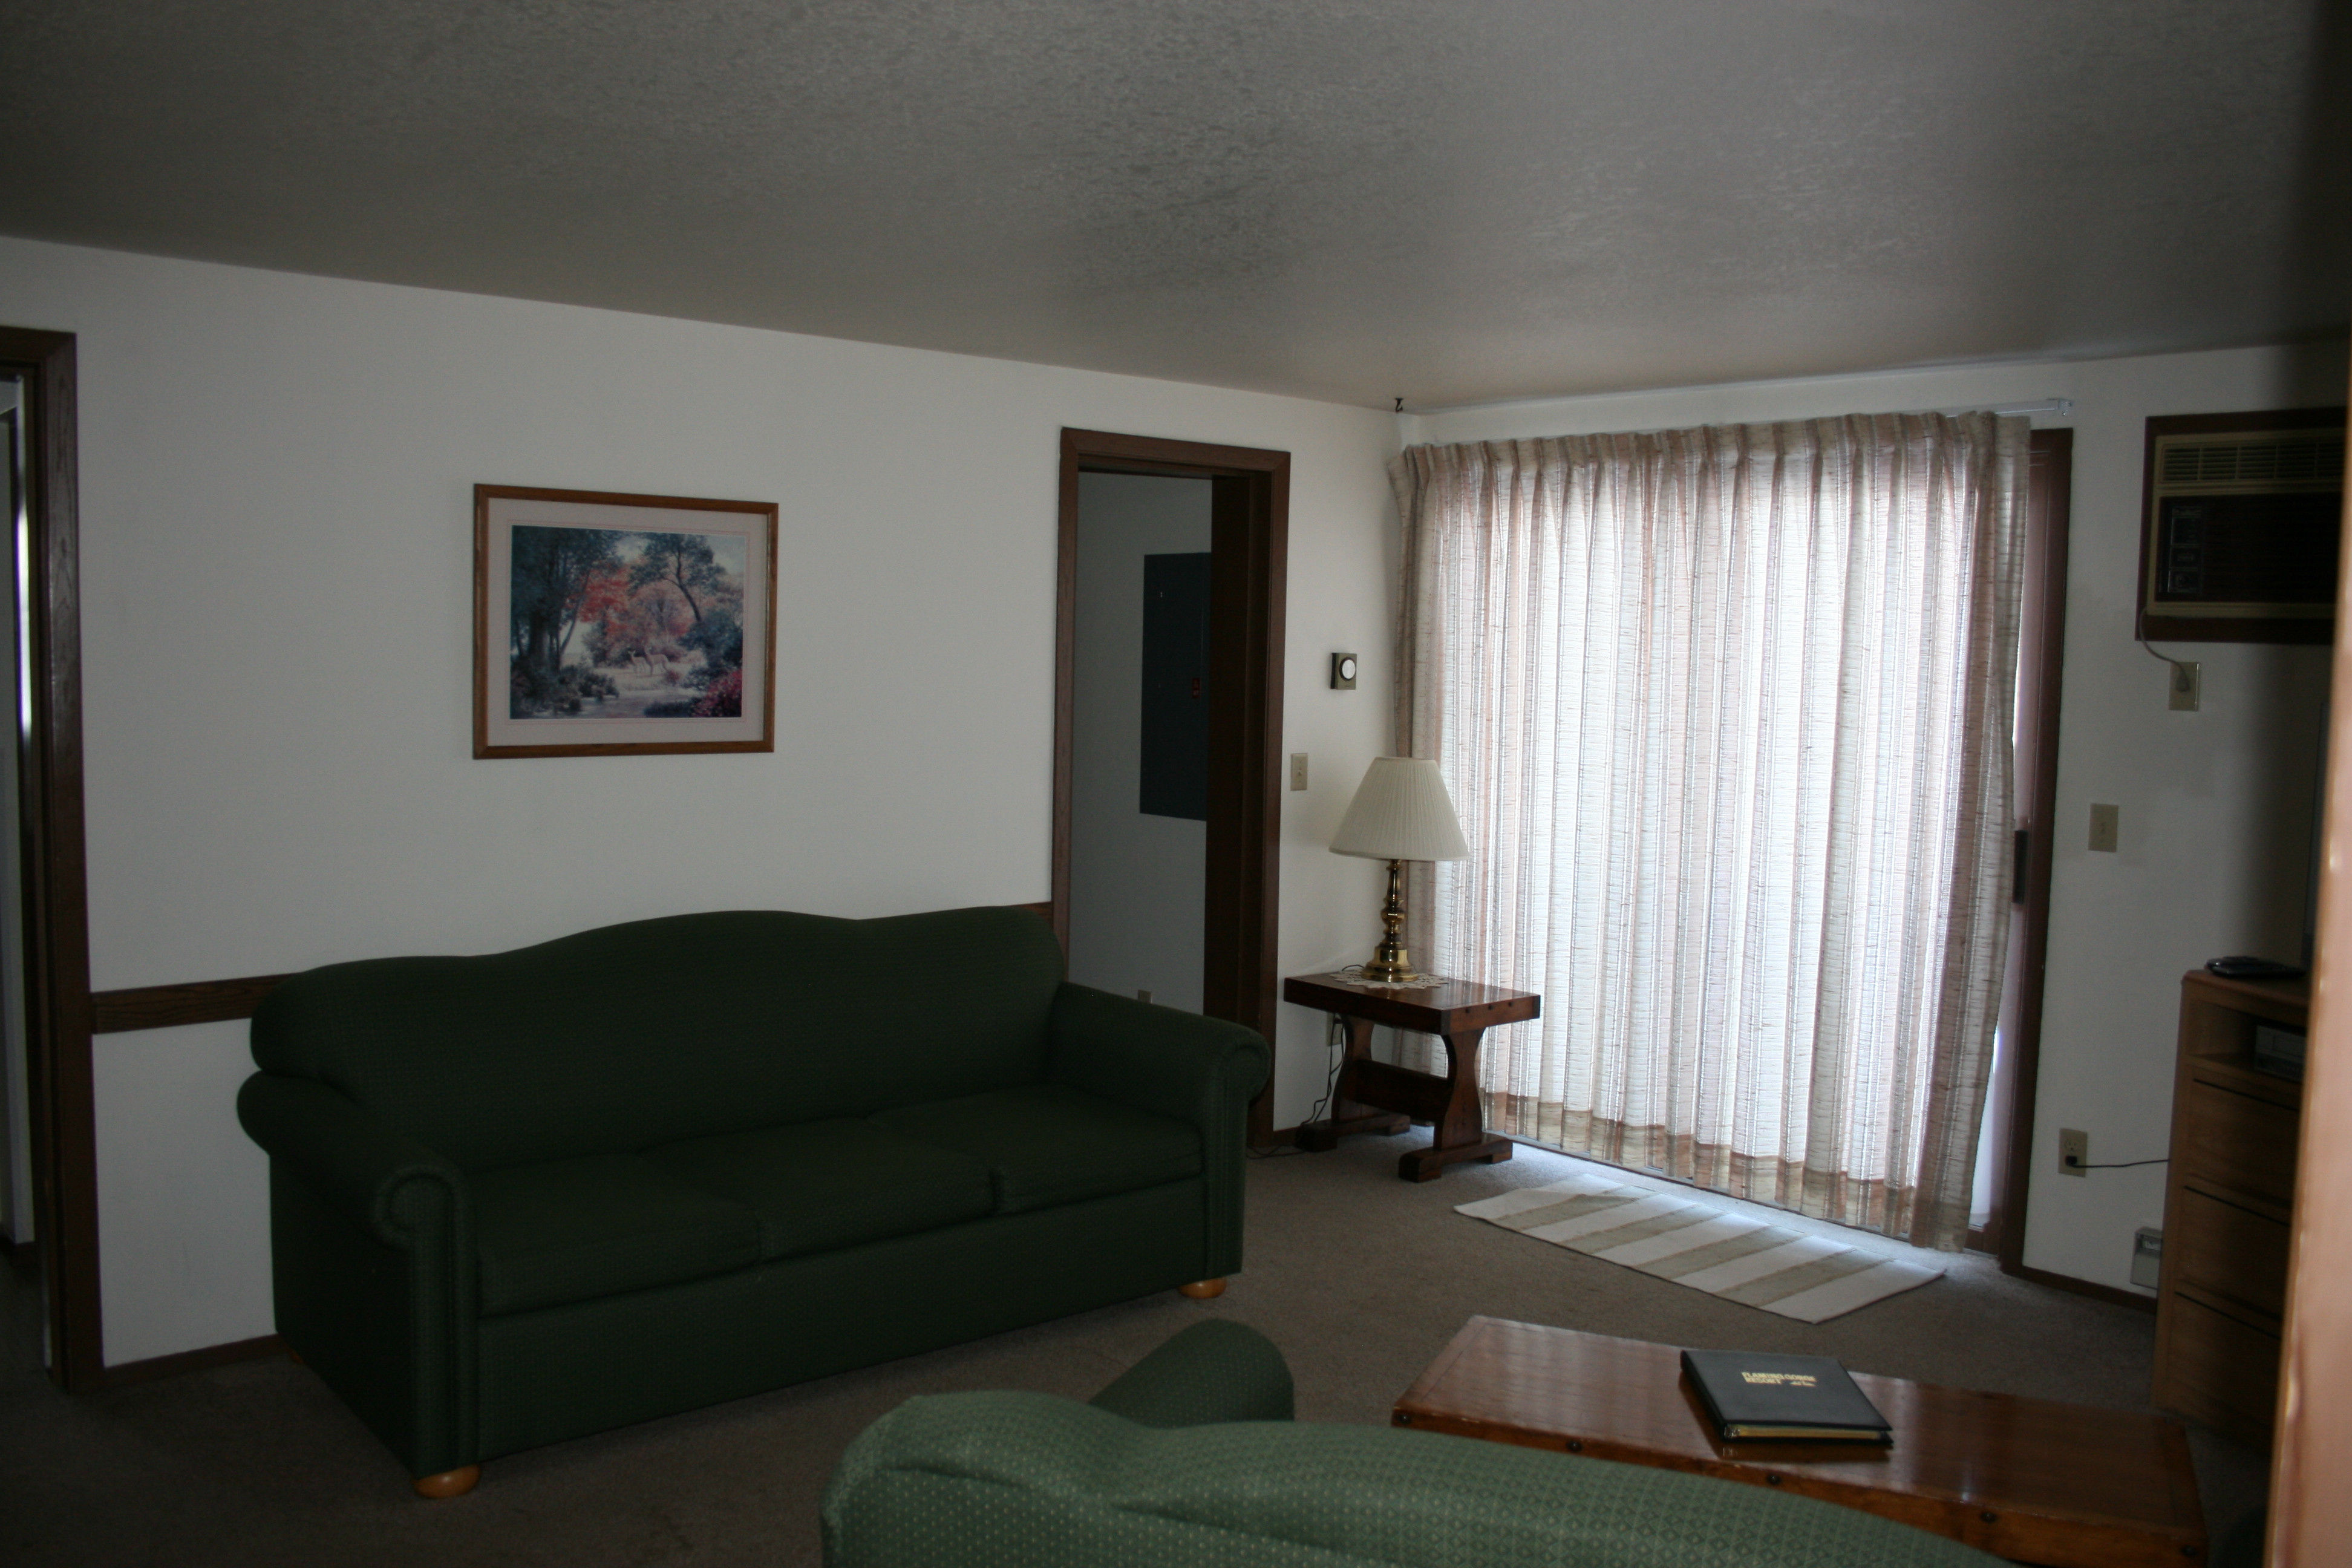 Flaming Gorge Resort, UT - One Bedroom Suites - Media Image